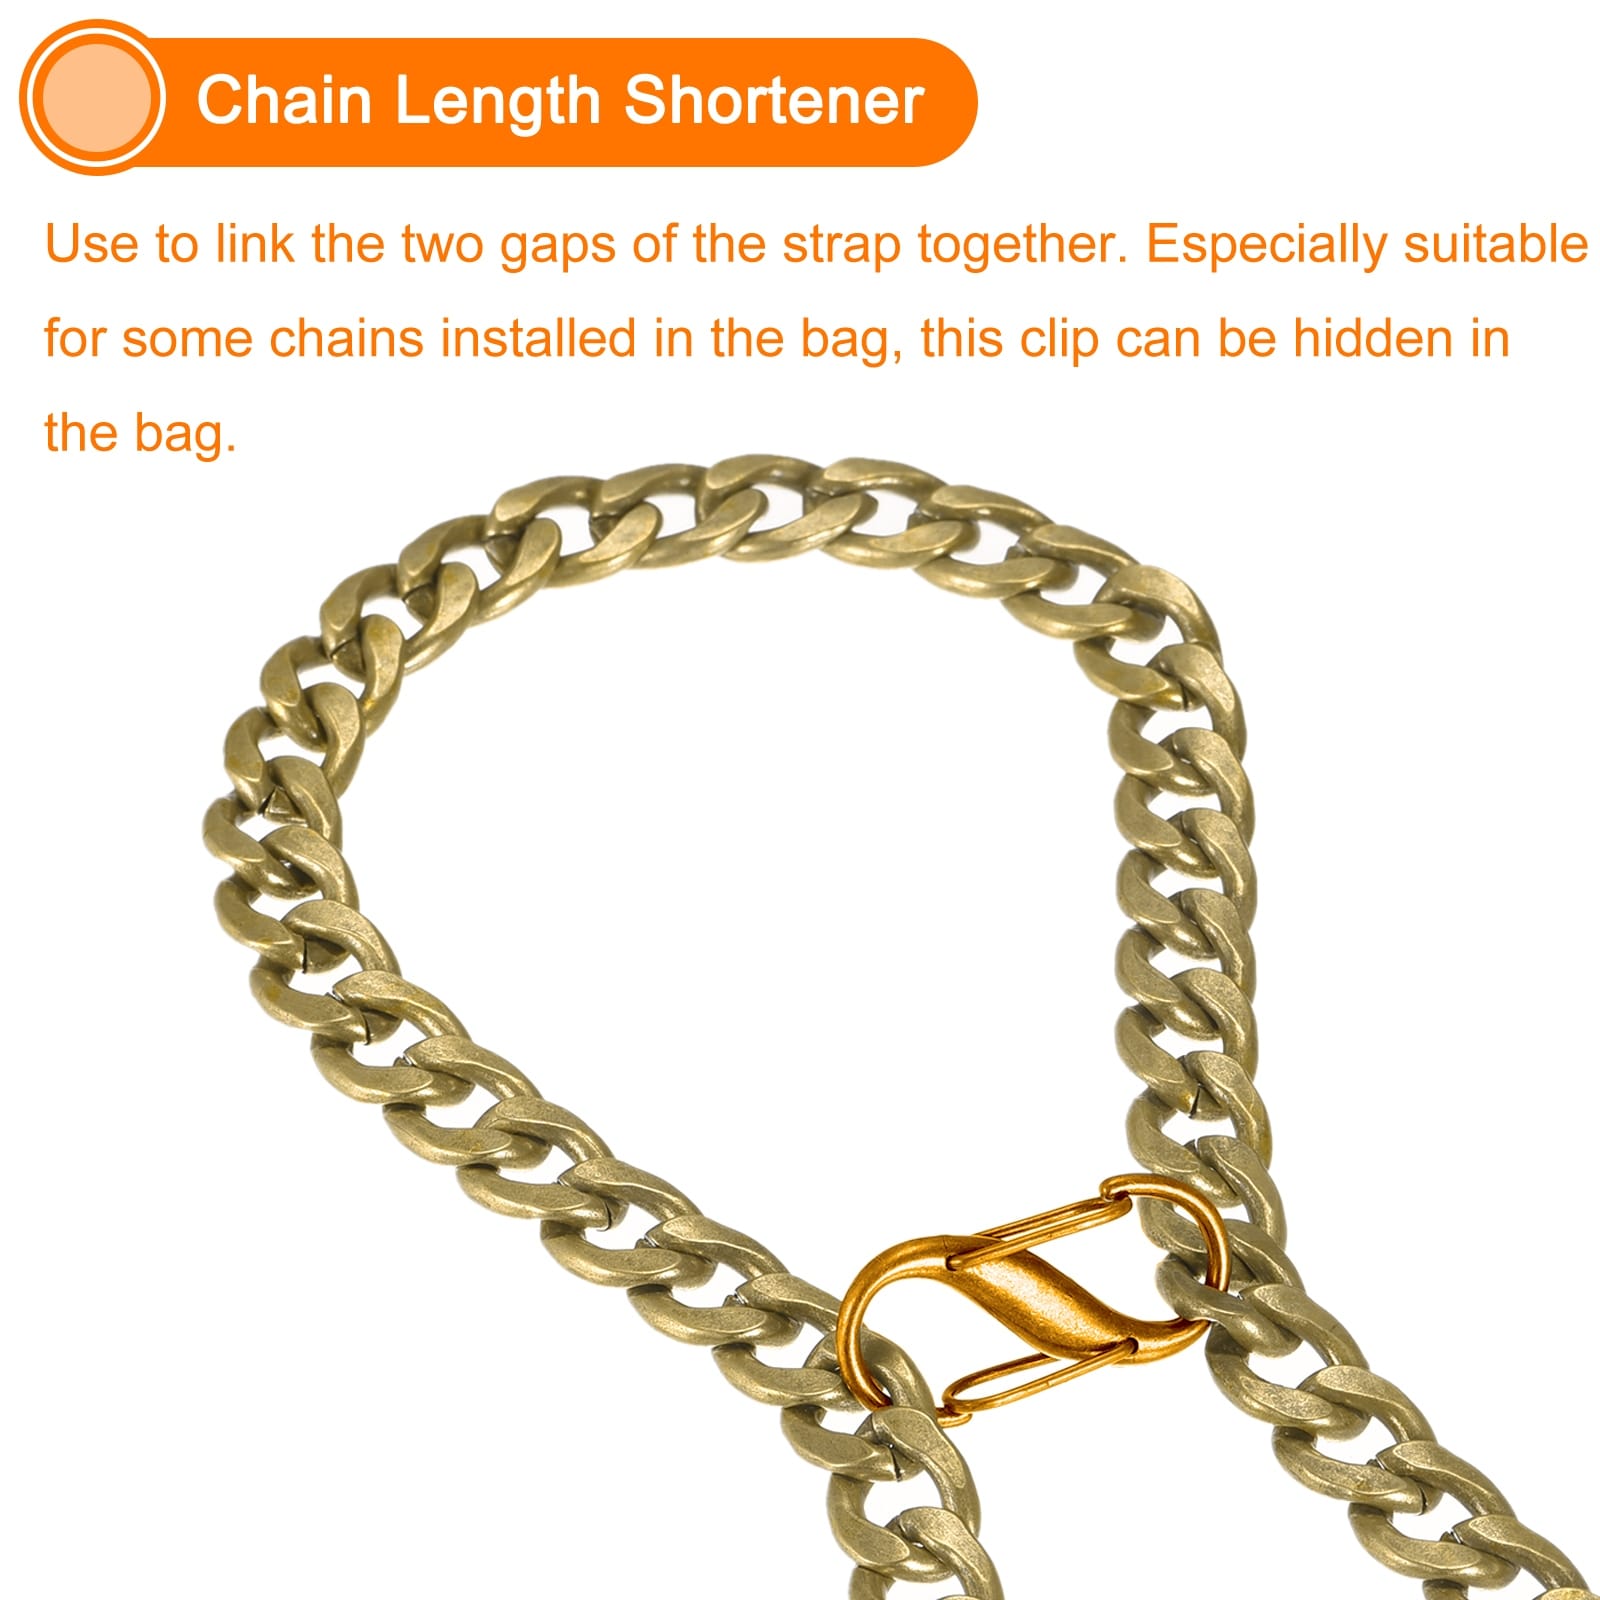 Adjustable Metal Buckle, 6Pcs 27x13mm Chain Shortener Bag Strap